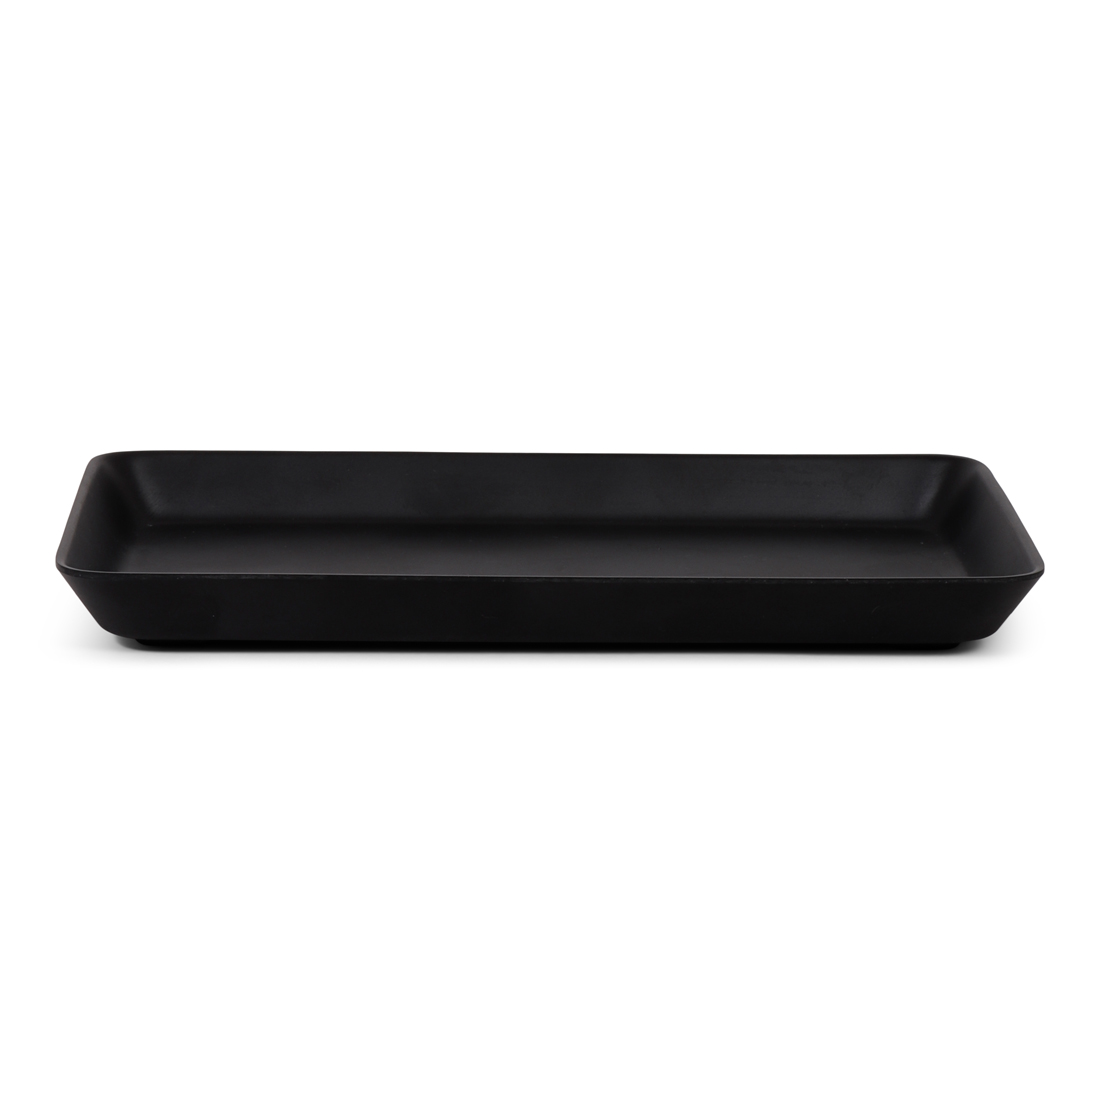 A8044043 KUMAI Dark Cypress Giftbox Handzeep+Handlotion+Tray